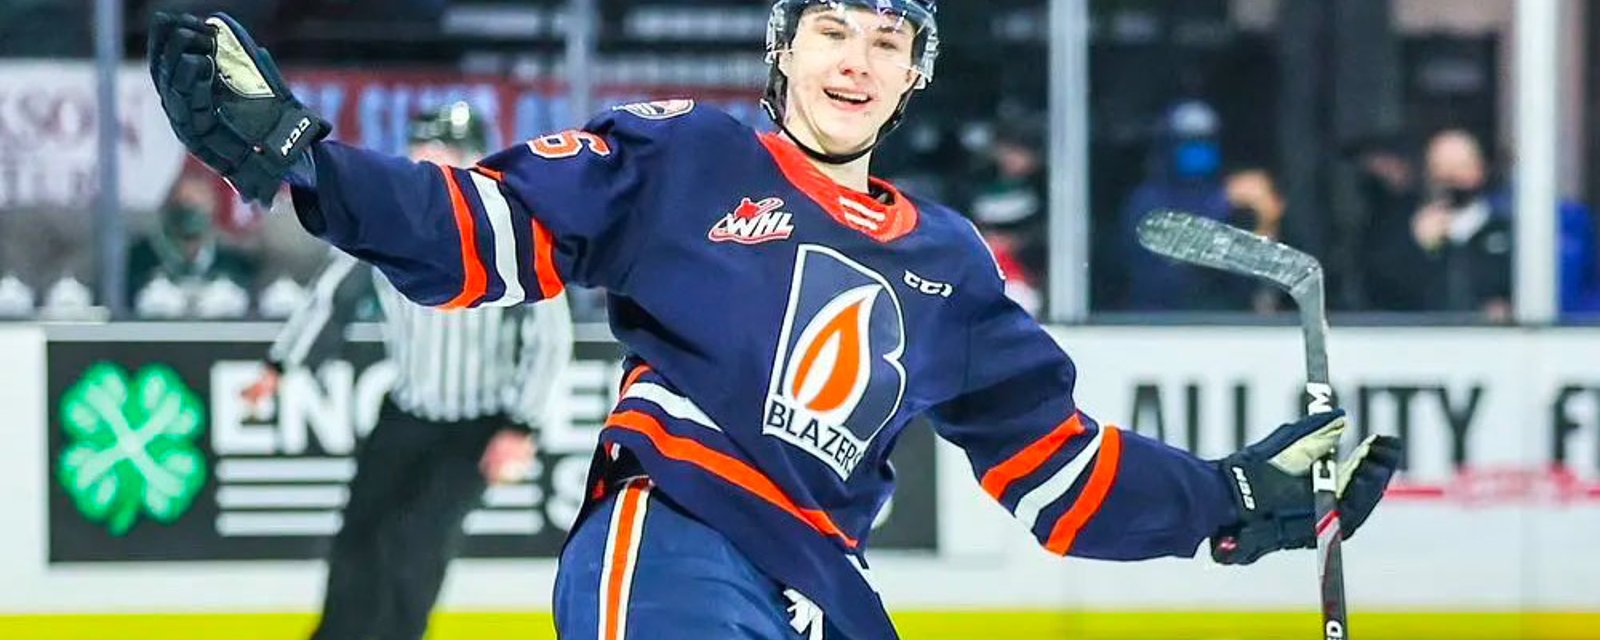 Leafs sign 18 year old forward Minten